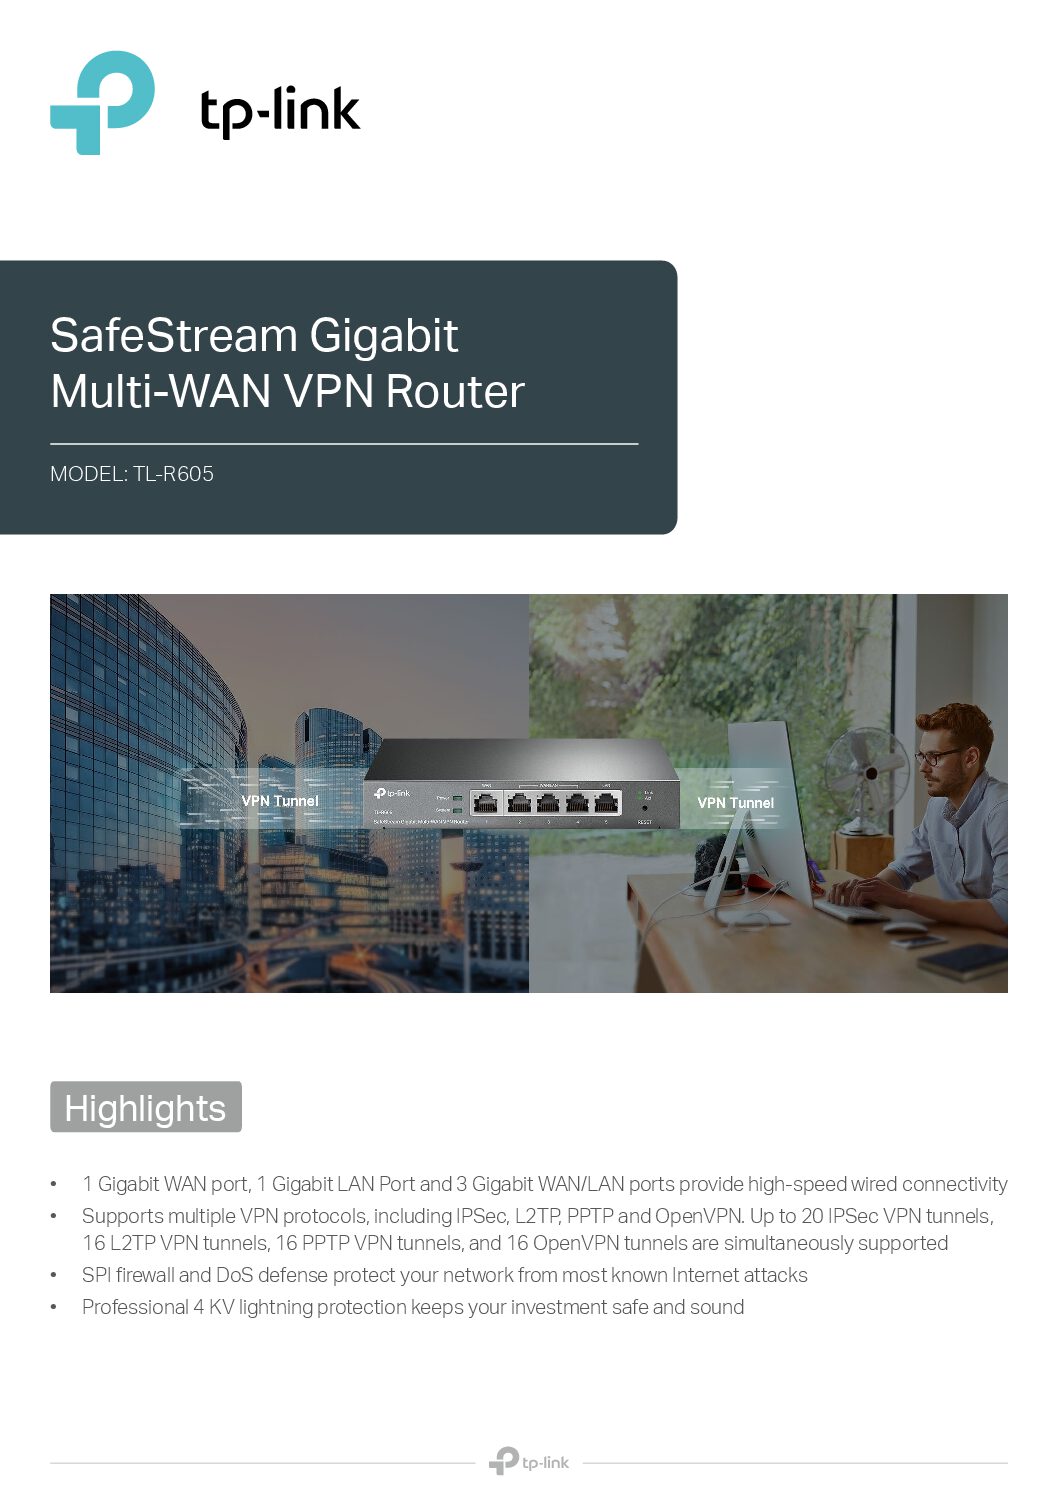 SafeStream TL-R605 AB Router Gigabit Multi-WAN รุ่น TP-Link SHOP VPN -